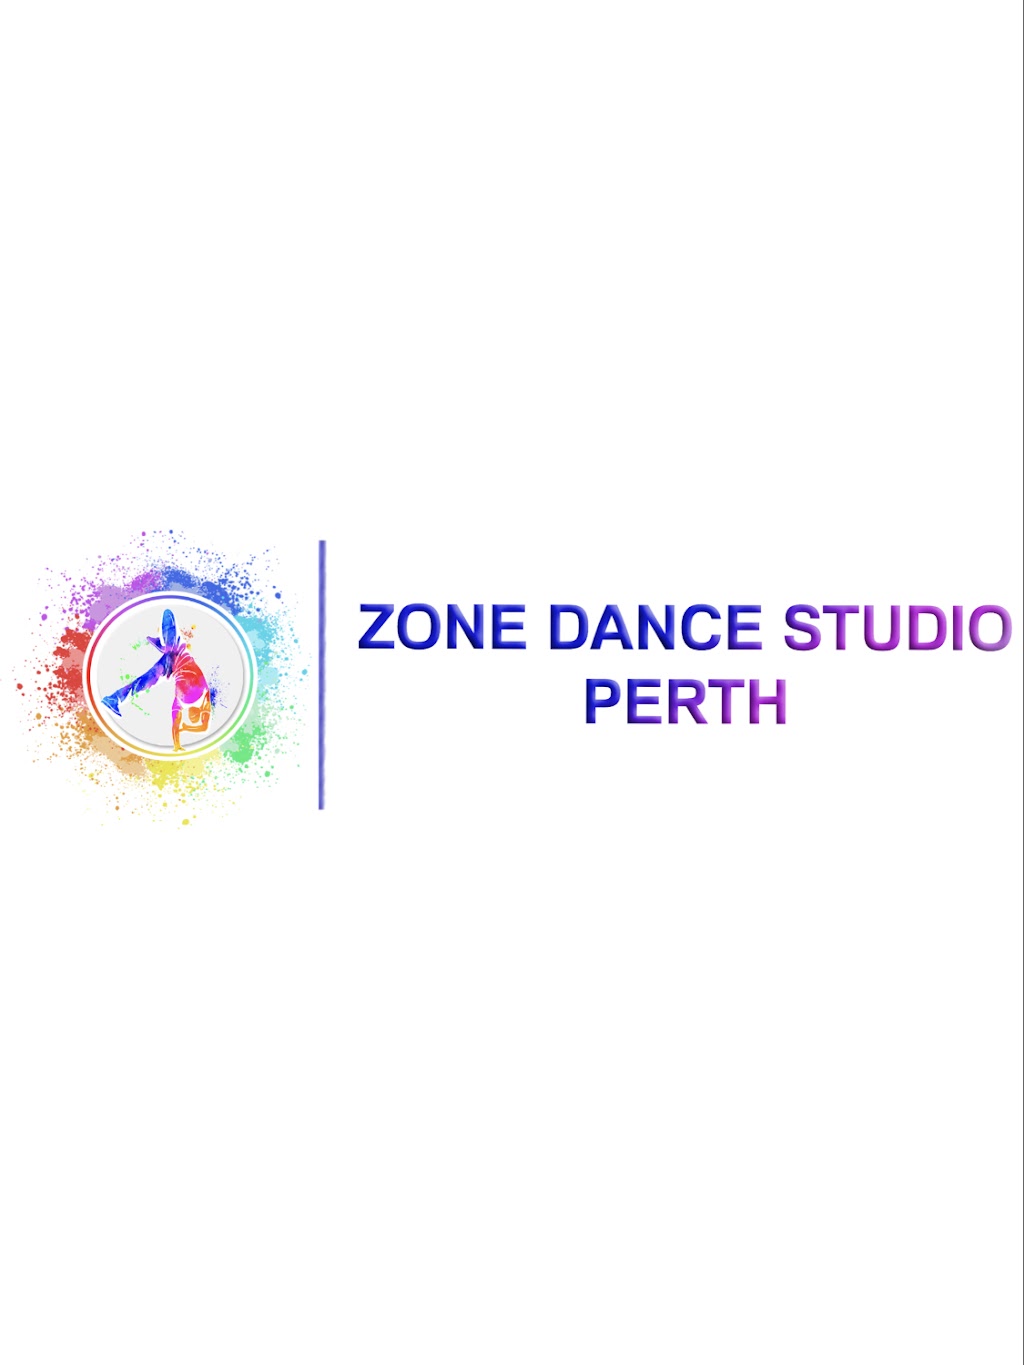 Zone Dance Studio Perth |  | UNIT 2/52 Kent St, Cannington WA 6107, Australia | 0452266534 OR +61 452 266 534